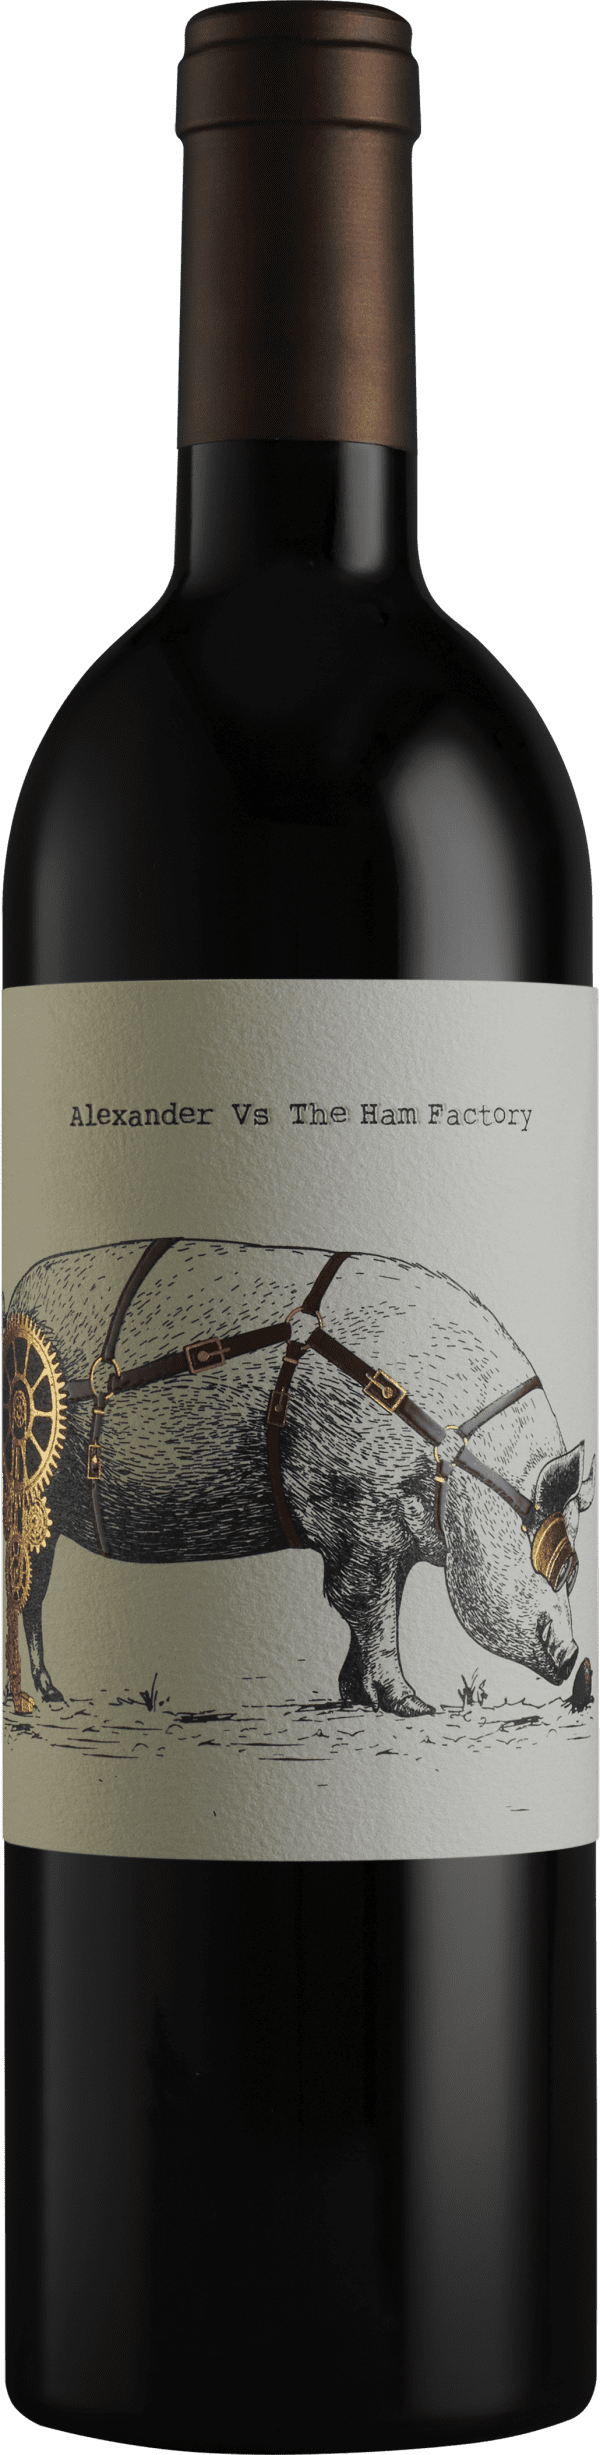 botella Alexander VS ham factory_REAL